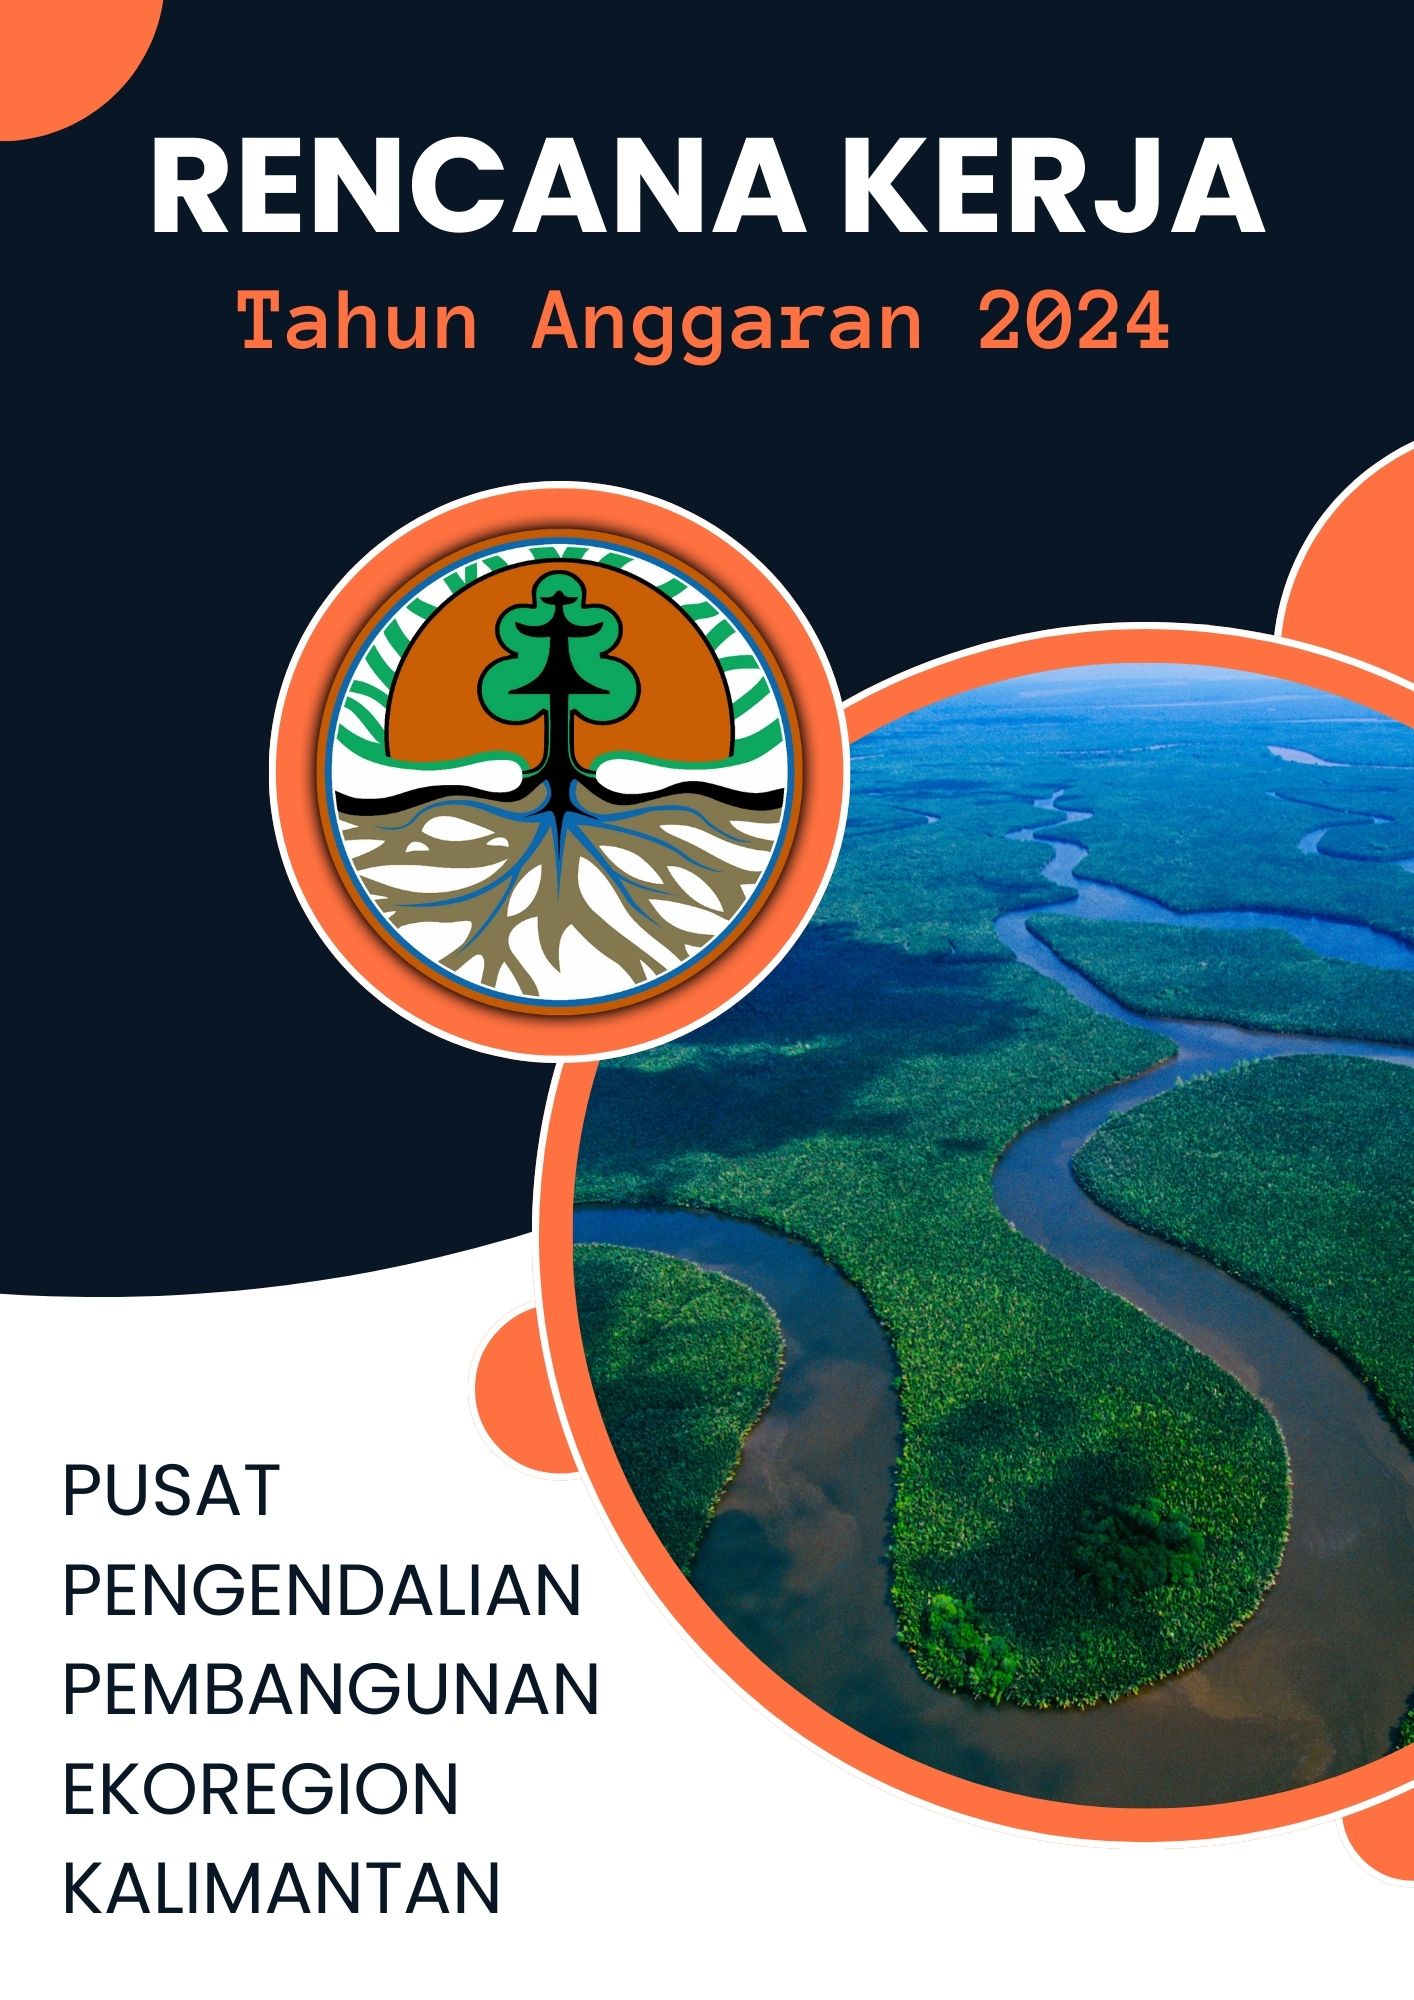 Read more about the article Rencana Kerja P3E Kalimantan Tahun Anggaran 2024